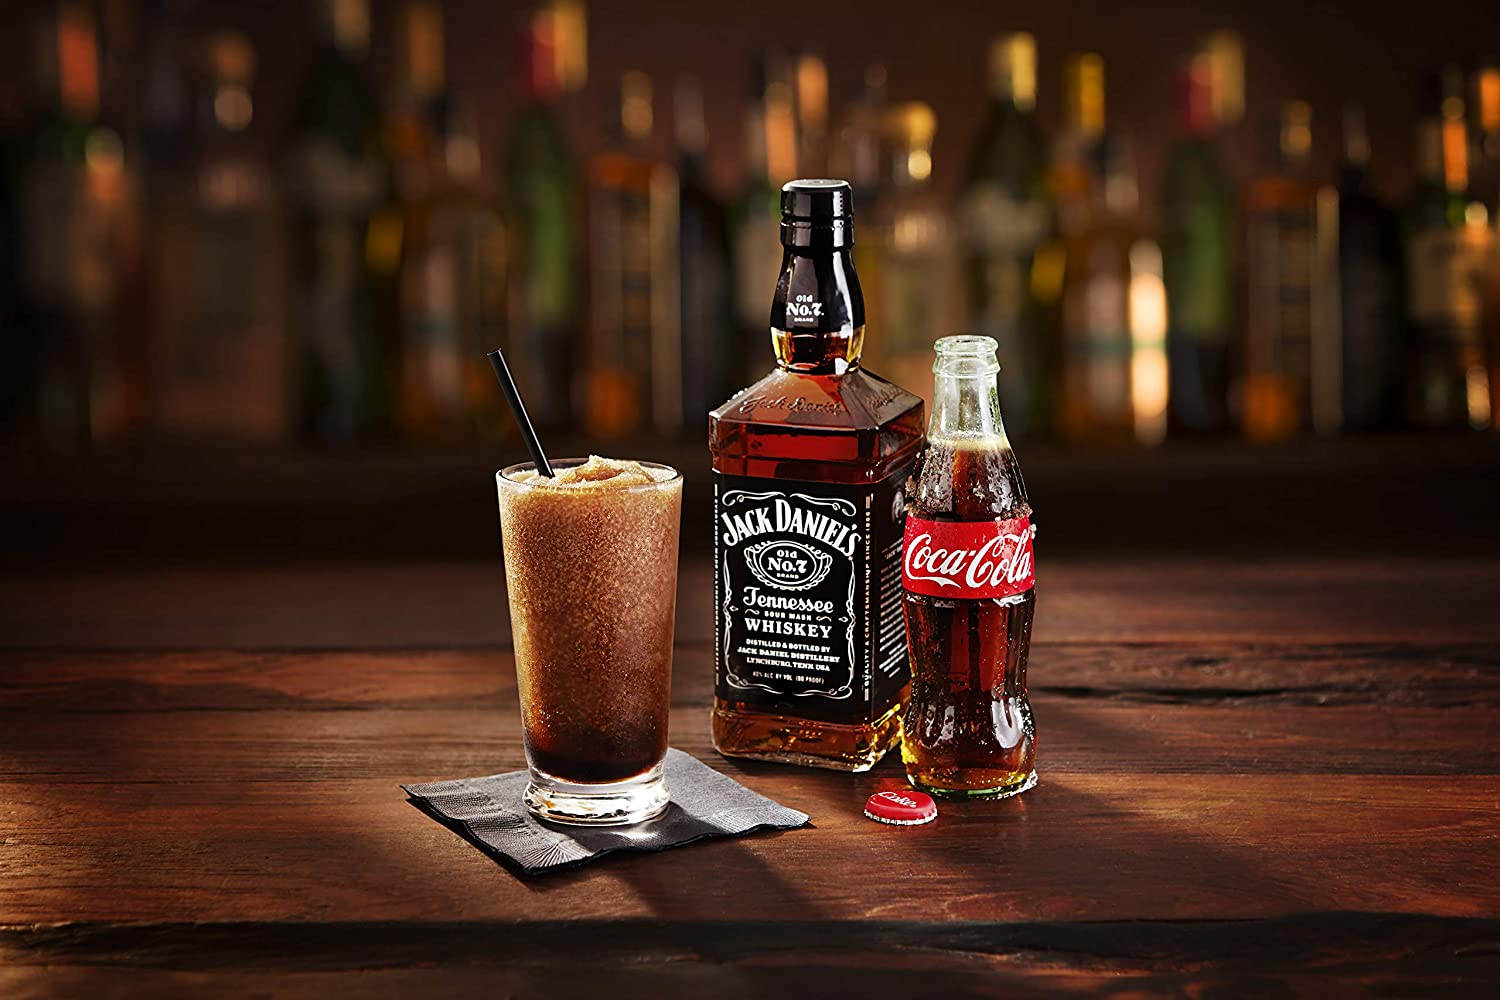 Whisky&Coca: confira a parceria da Coca-Cola com a Jack Daniel’s